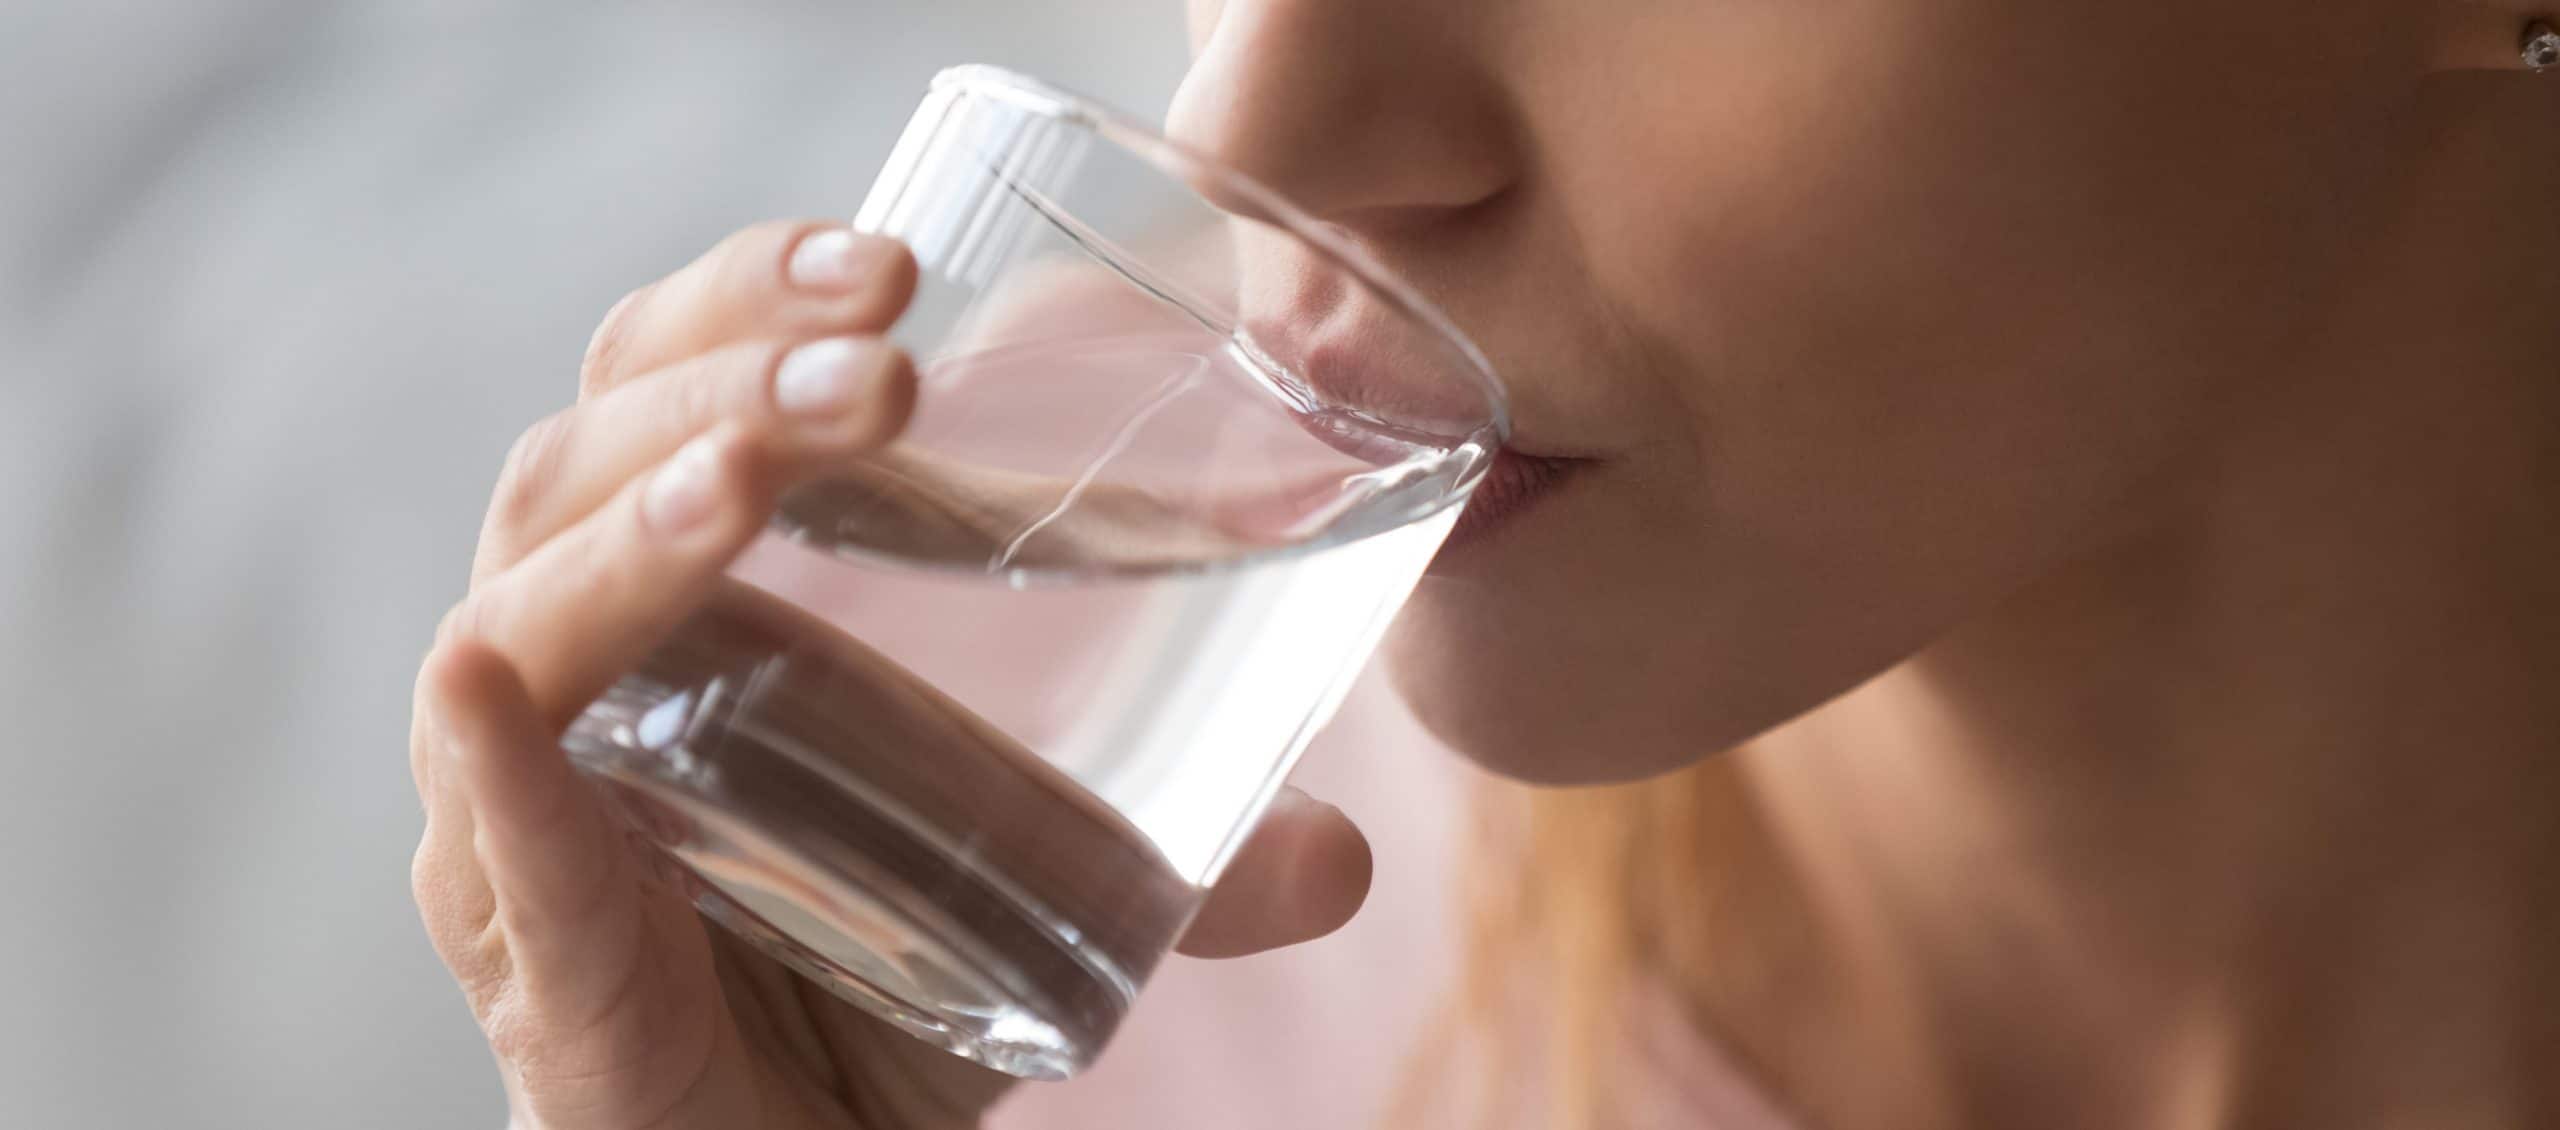 drinking water health benefits